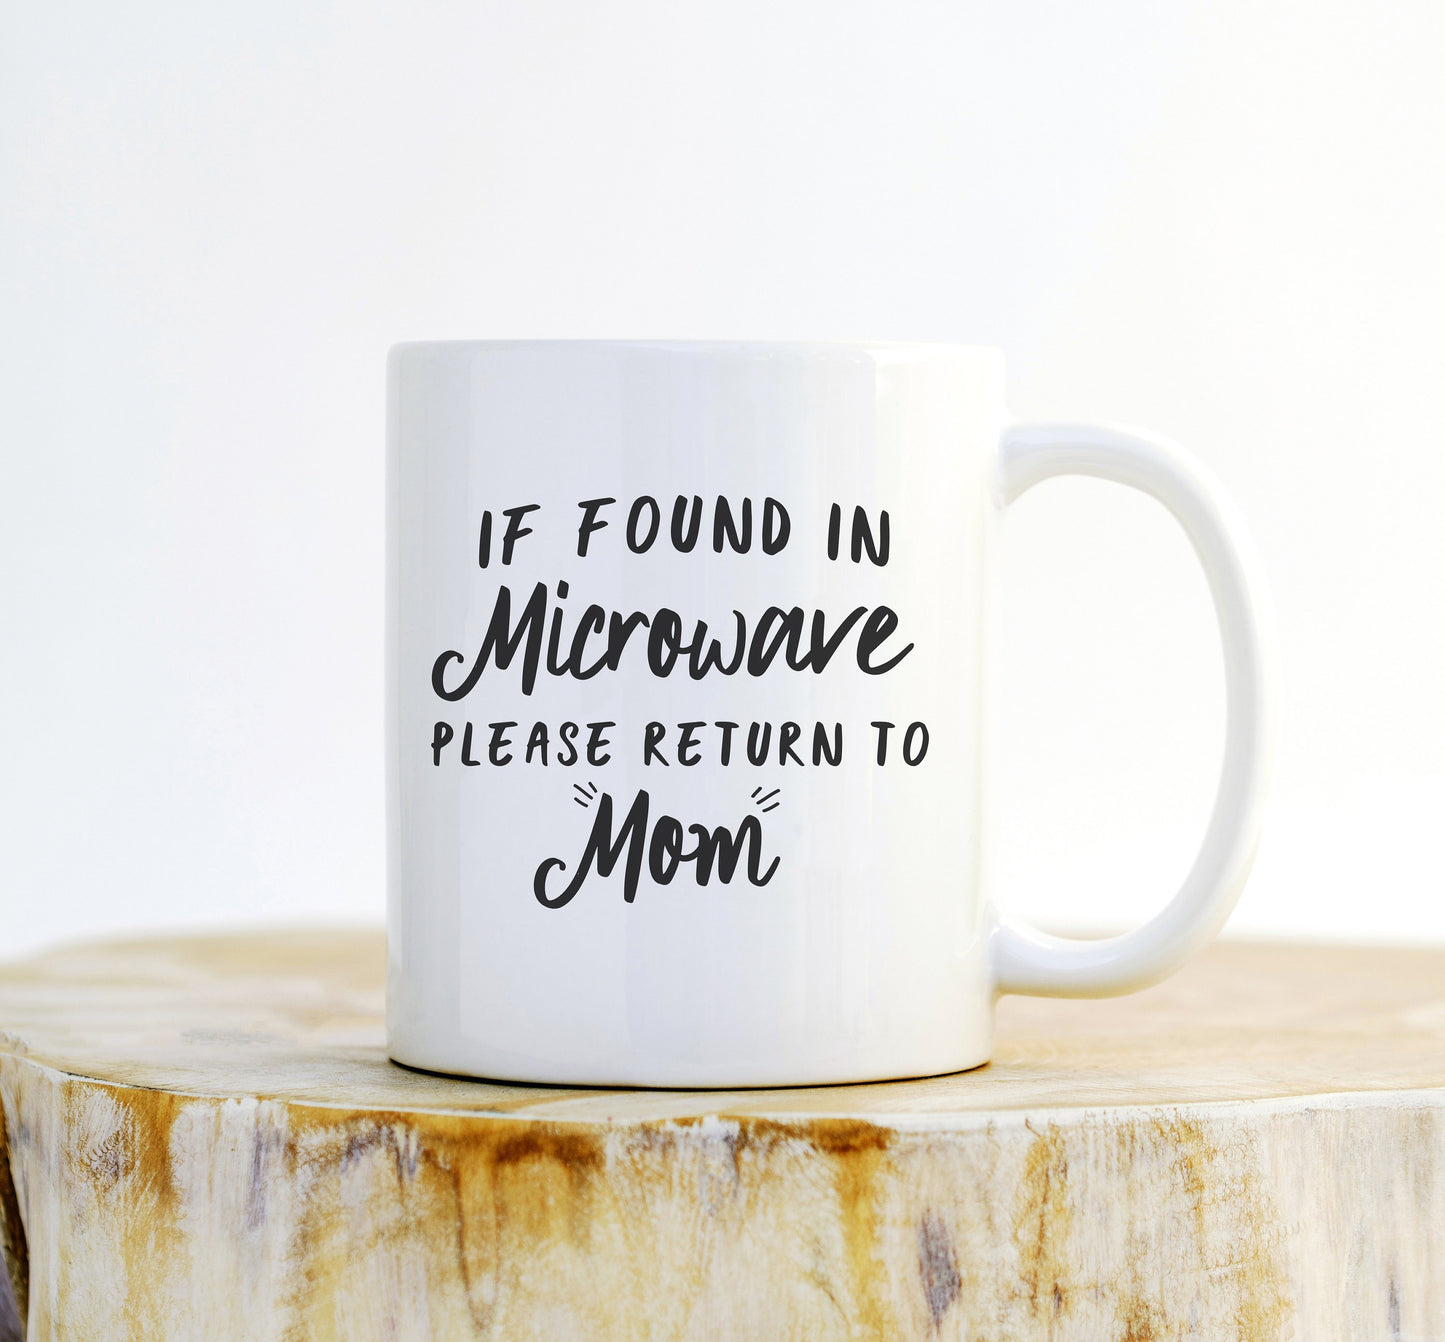 If Found In Microwave Please Return To Mom Mug - Mom Mug, Mom Gift, Mothers Day Gift, Gifts For Mom, New Mom Gift, Mom Life Mug